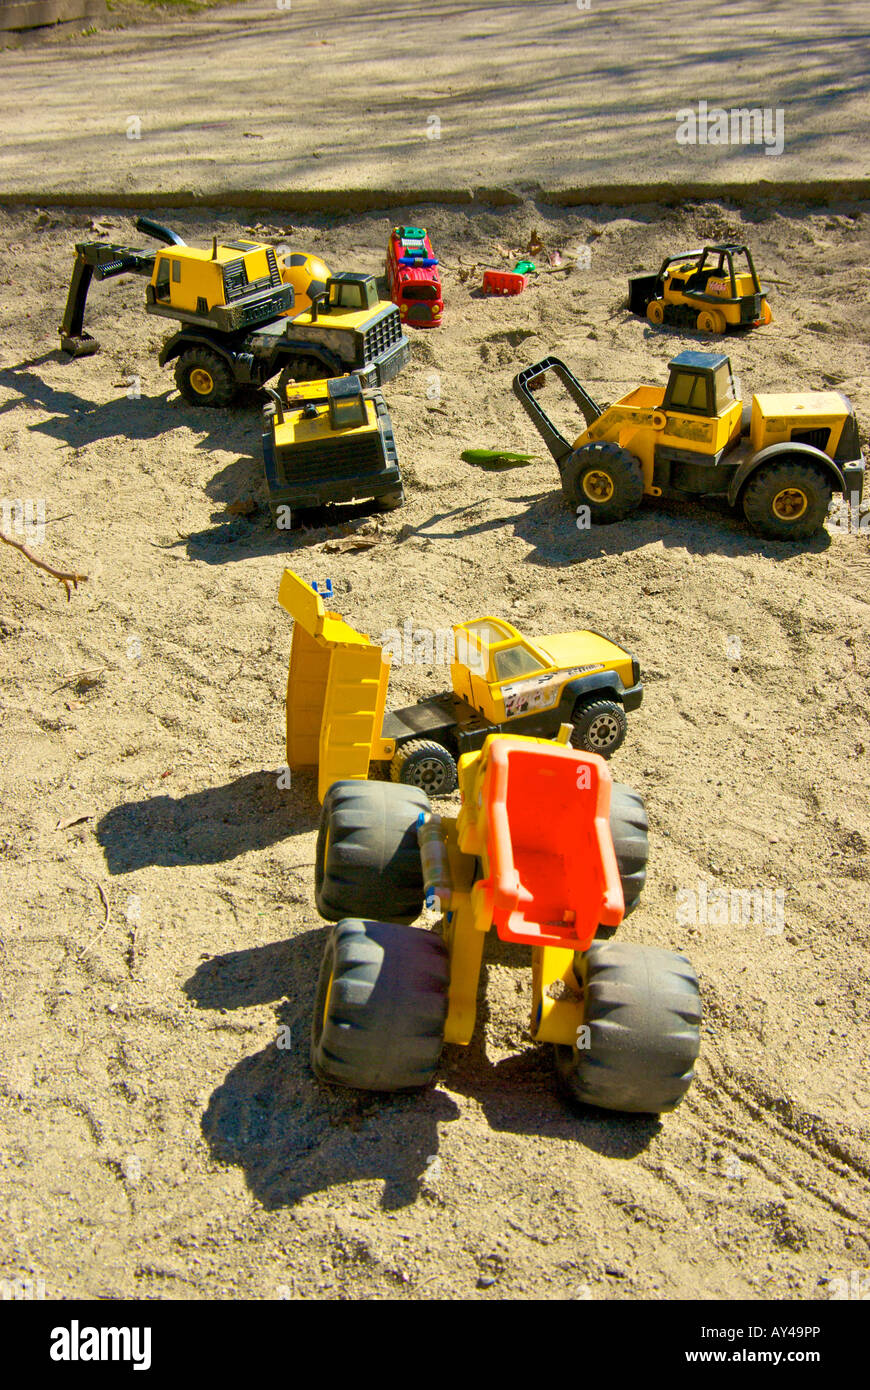 Toys in a sandbox Stock Photo